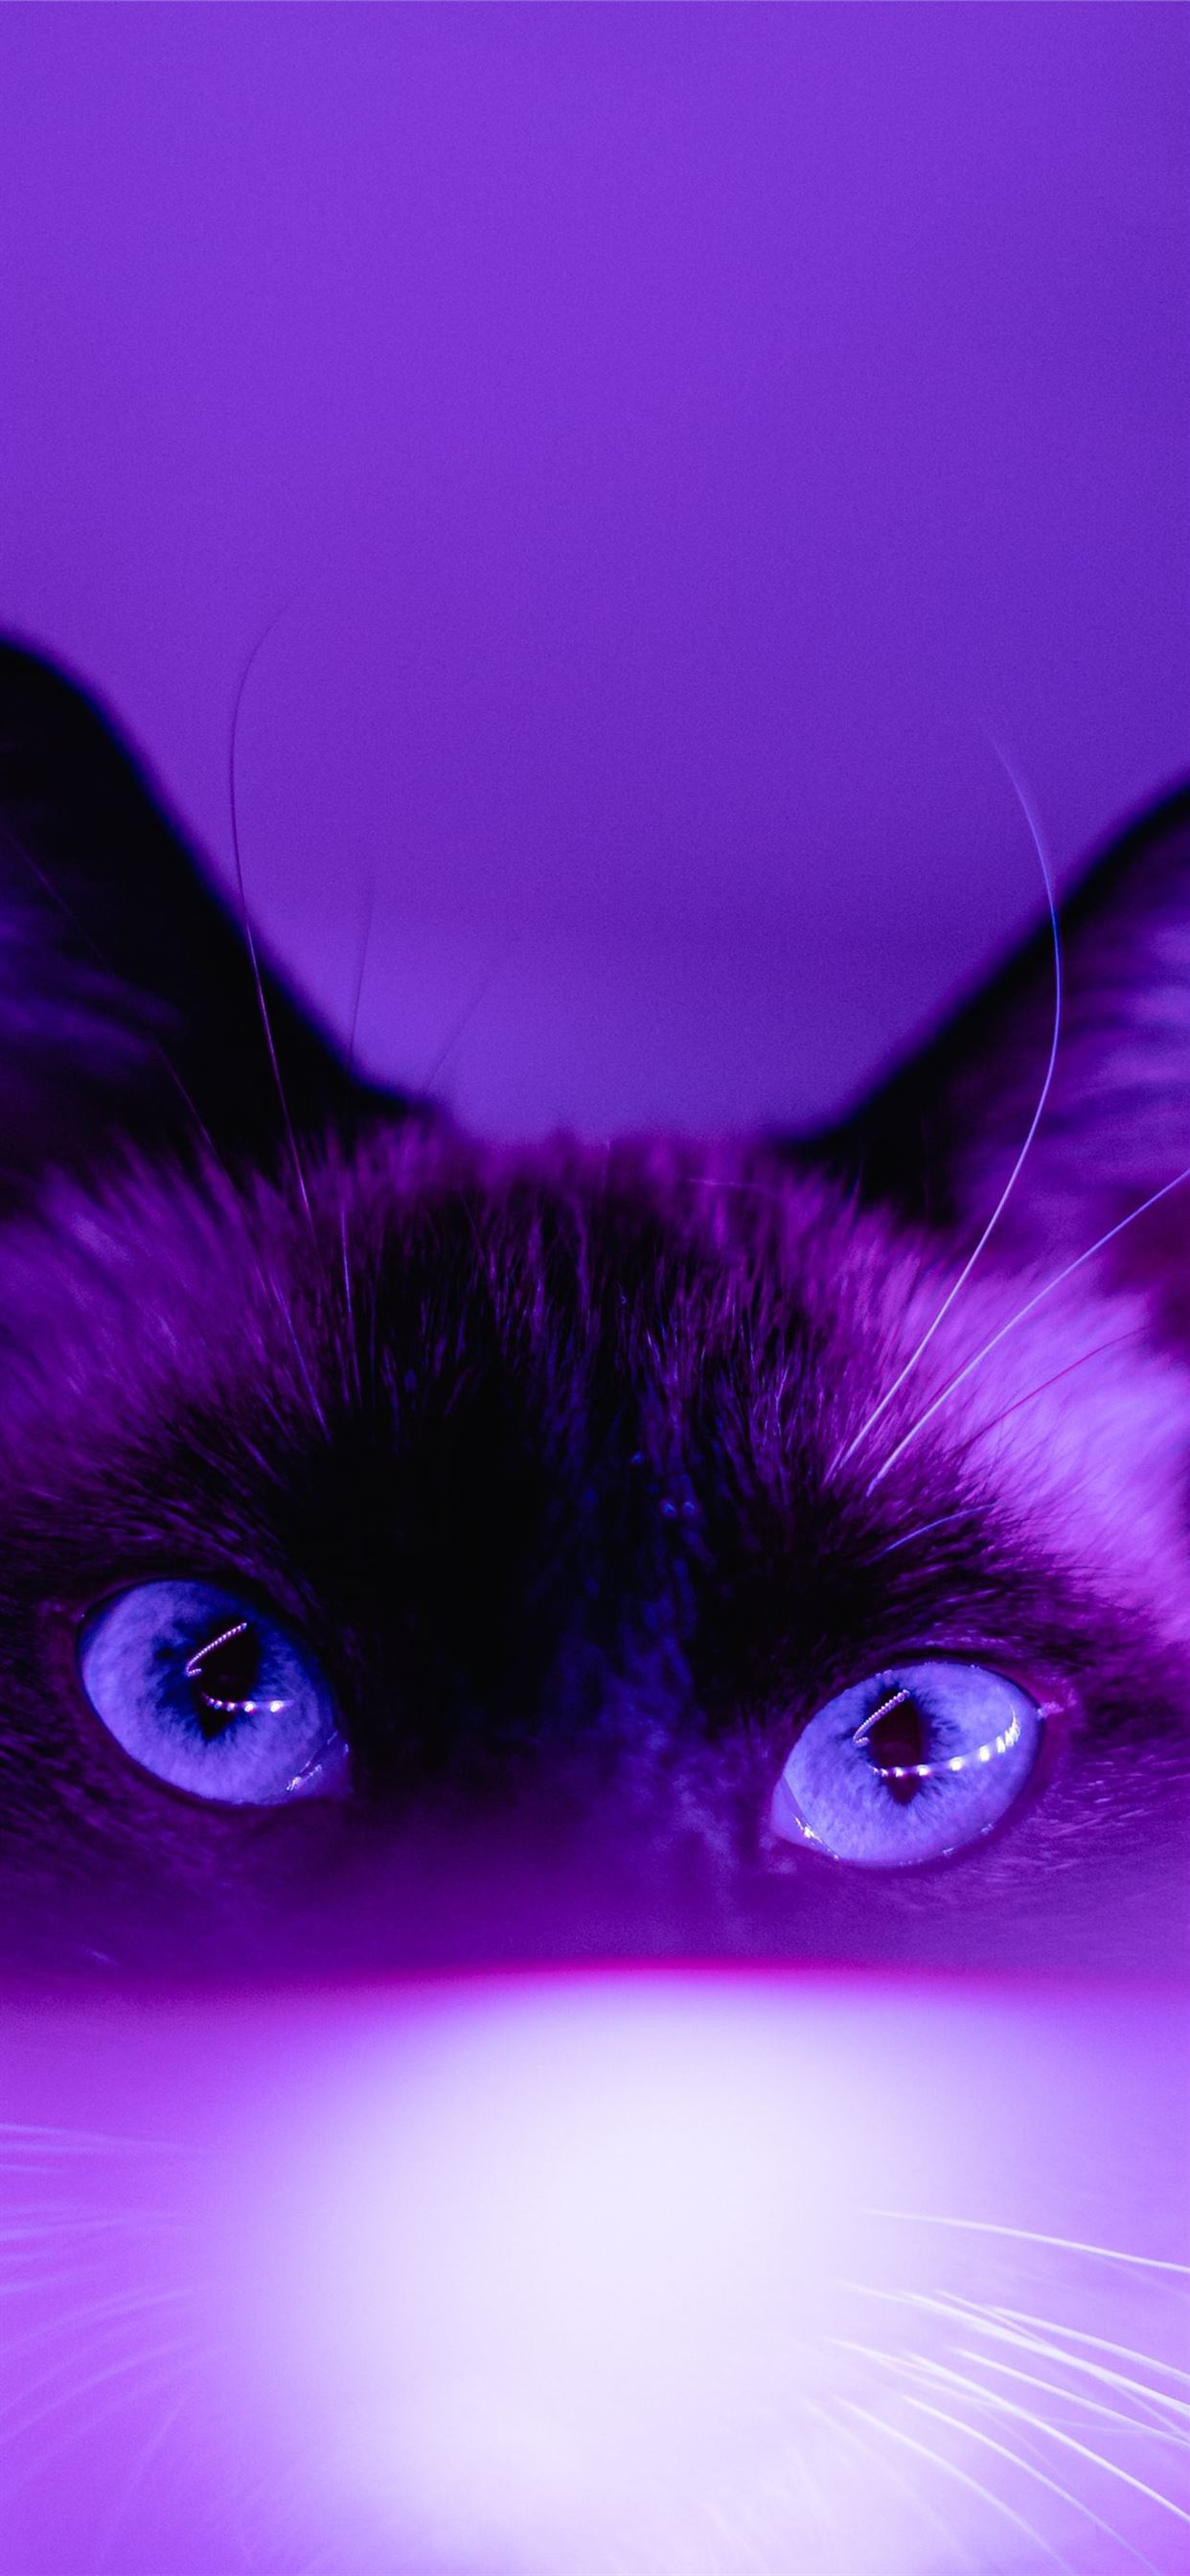 6300 Purple Cat Illustrations RoyaltyFree Vector Graphics  Clip Art   iStock  Pink and purple cat